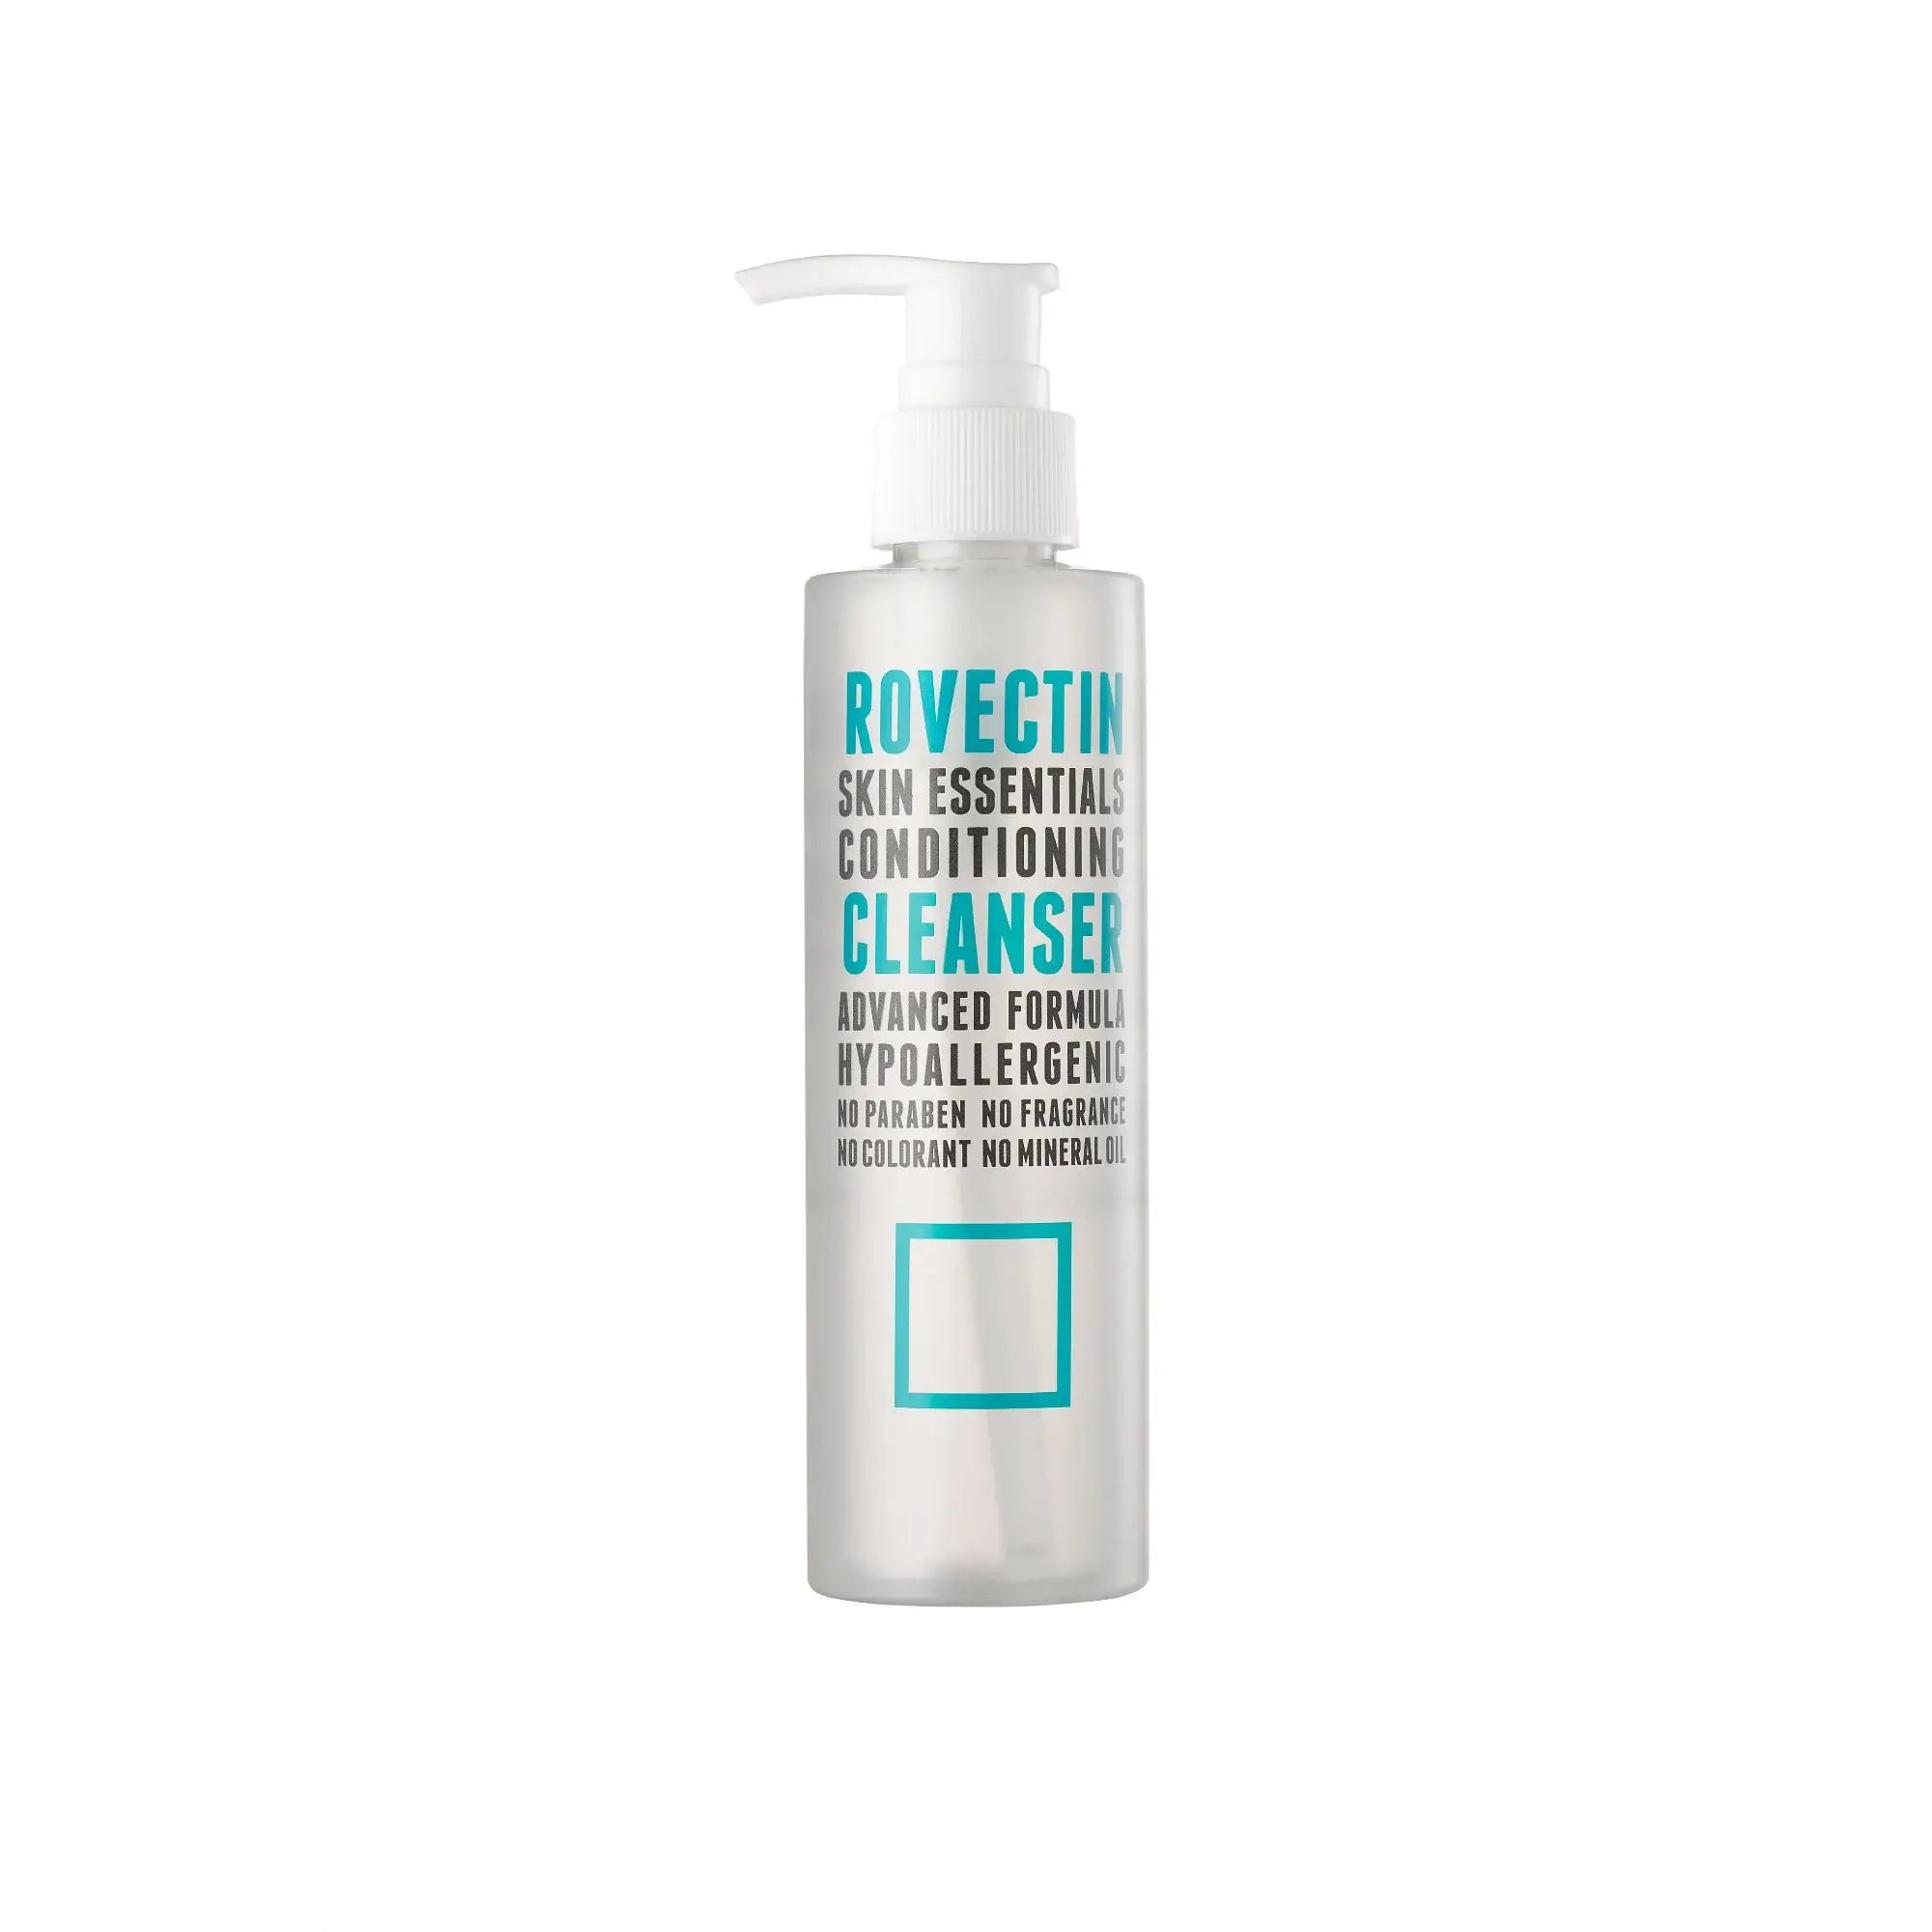 Rovectin - Skin Essentials Conditioning Cleanser - 175ml